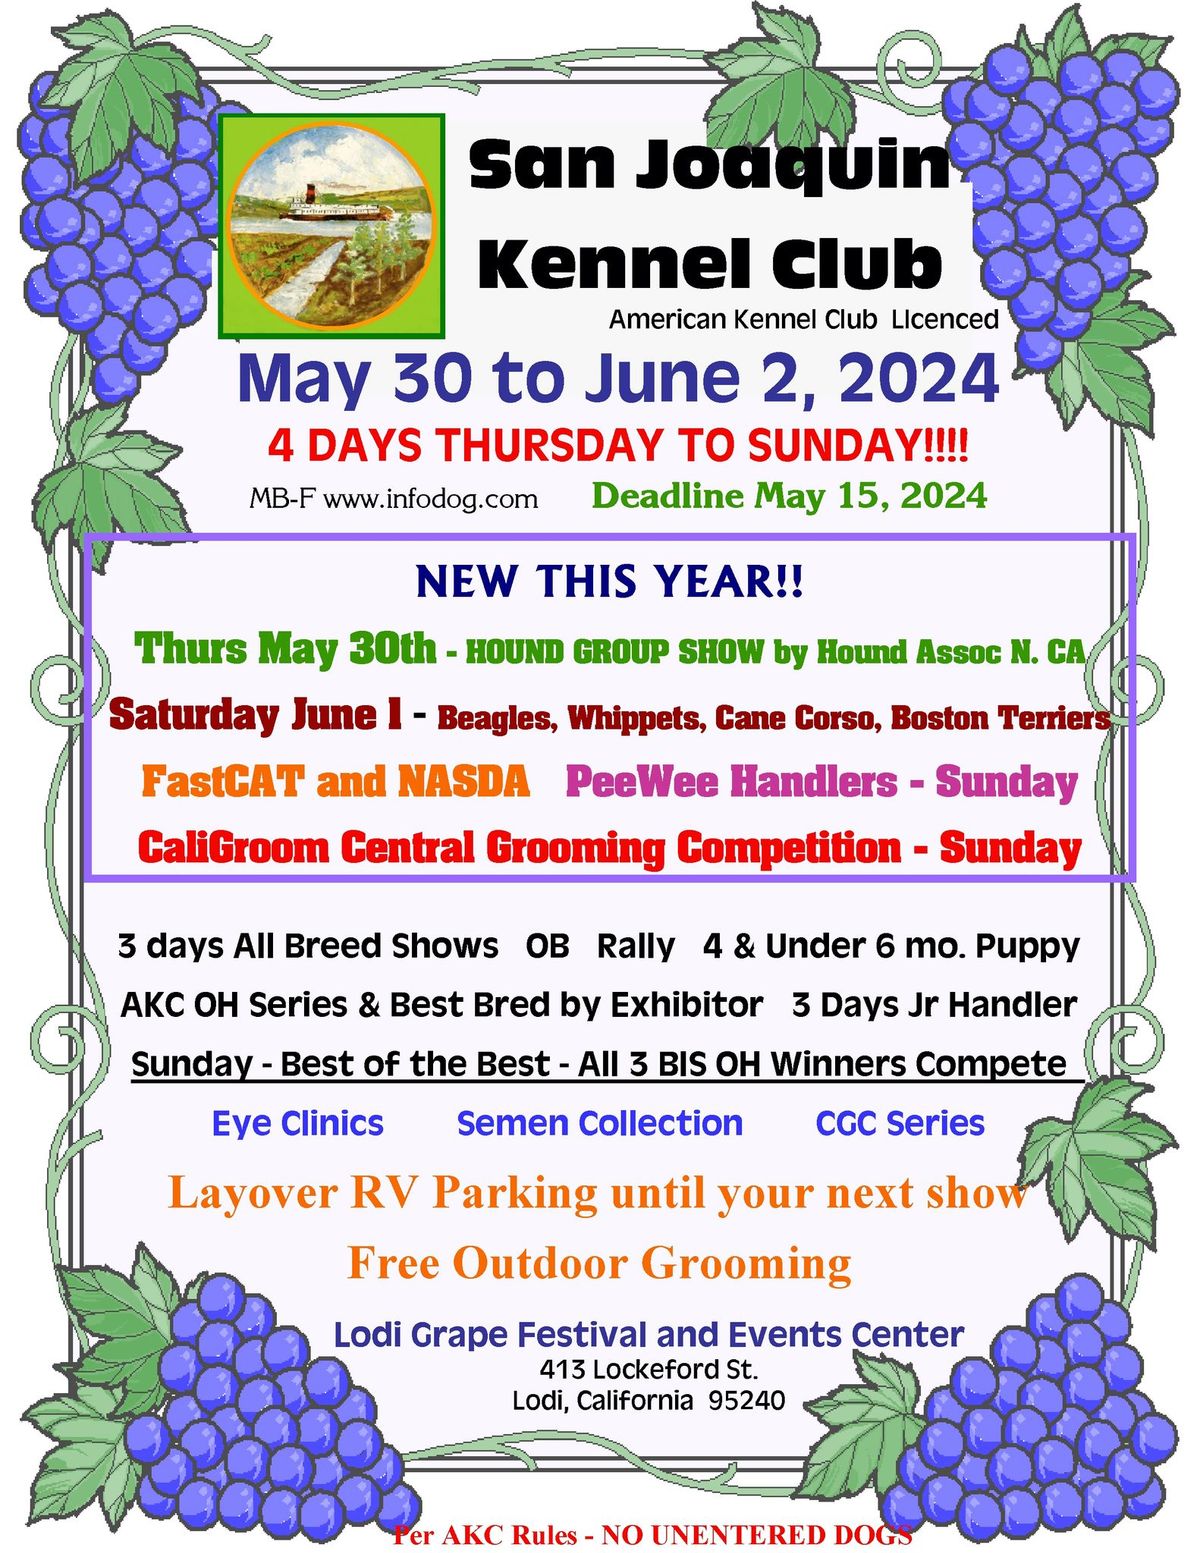 San Joaquin Kennel Club - Annual All Breed Dog Show